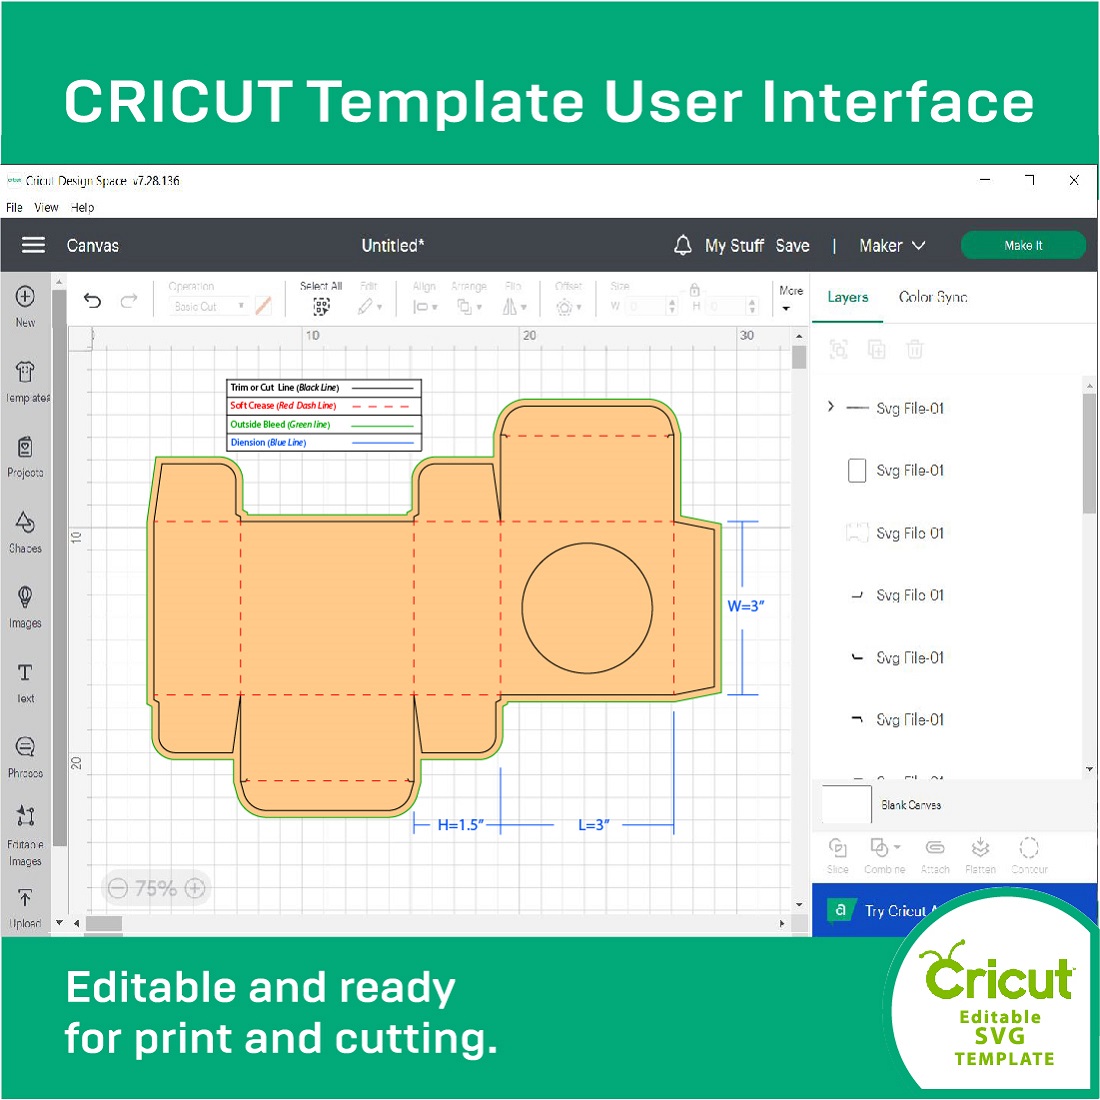 Screen shot of the cricut template user interface.